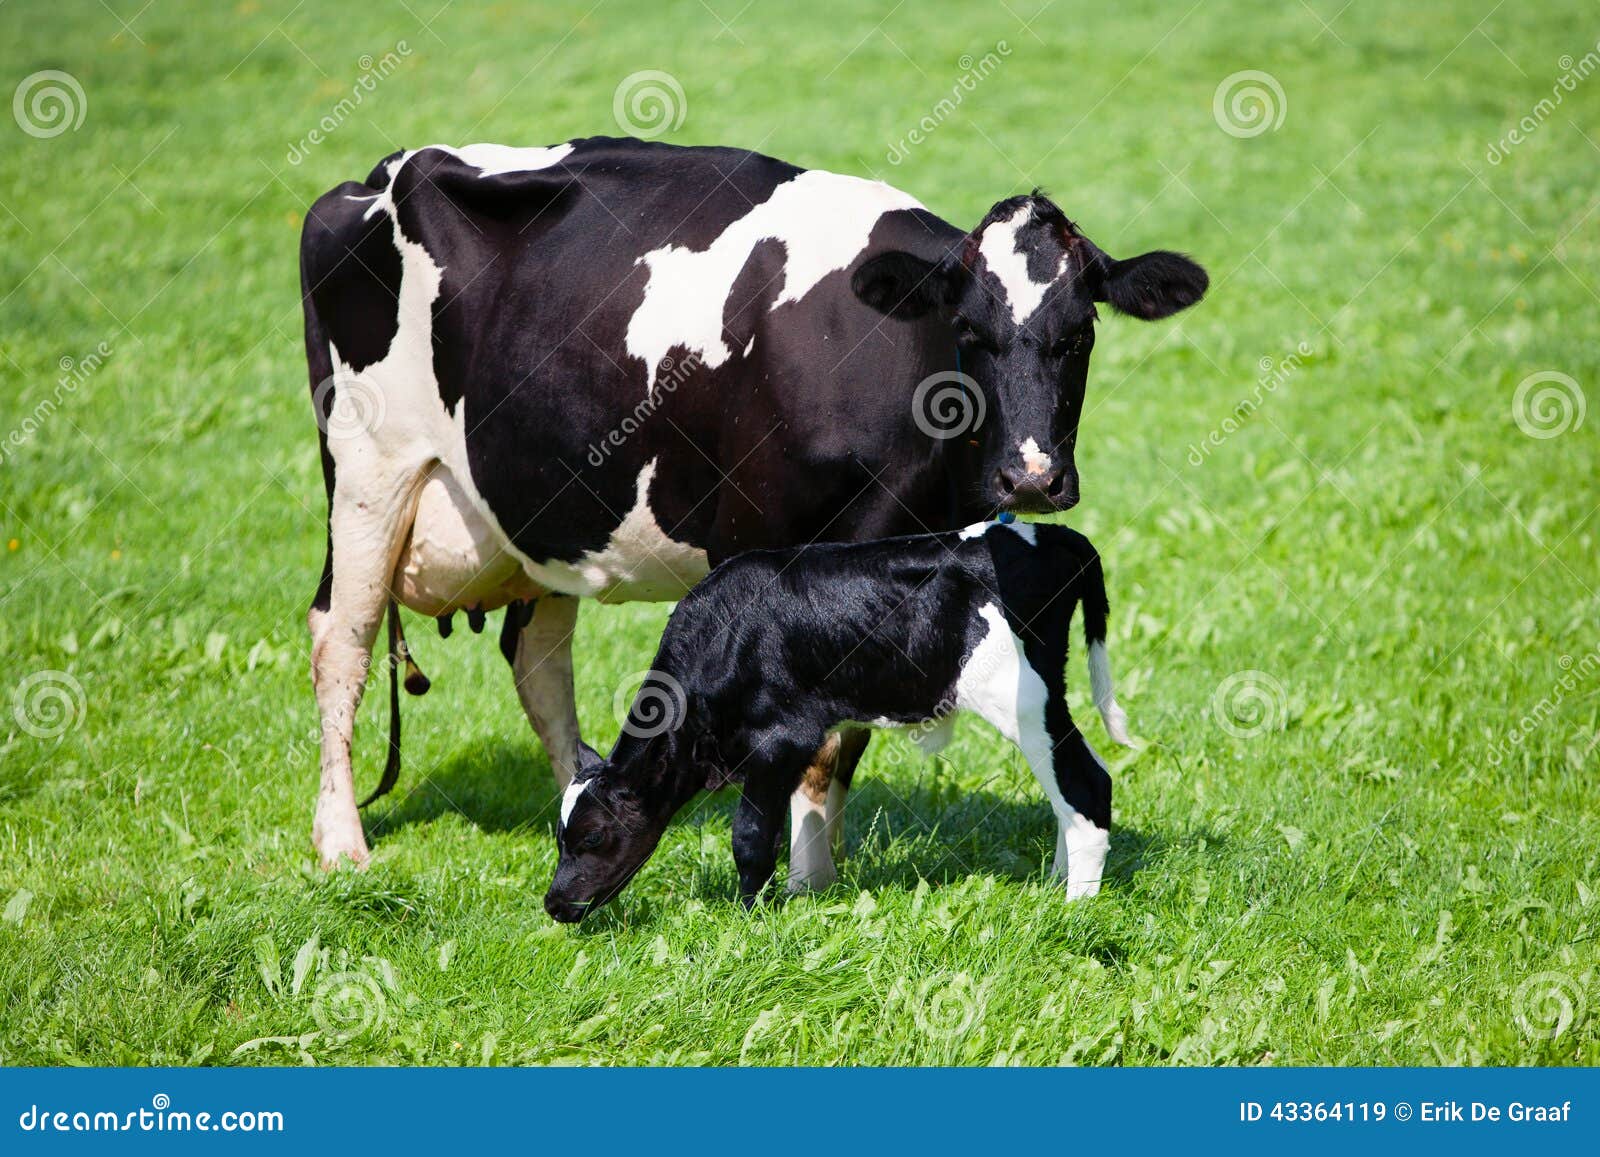 cow with newborn calf